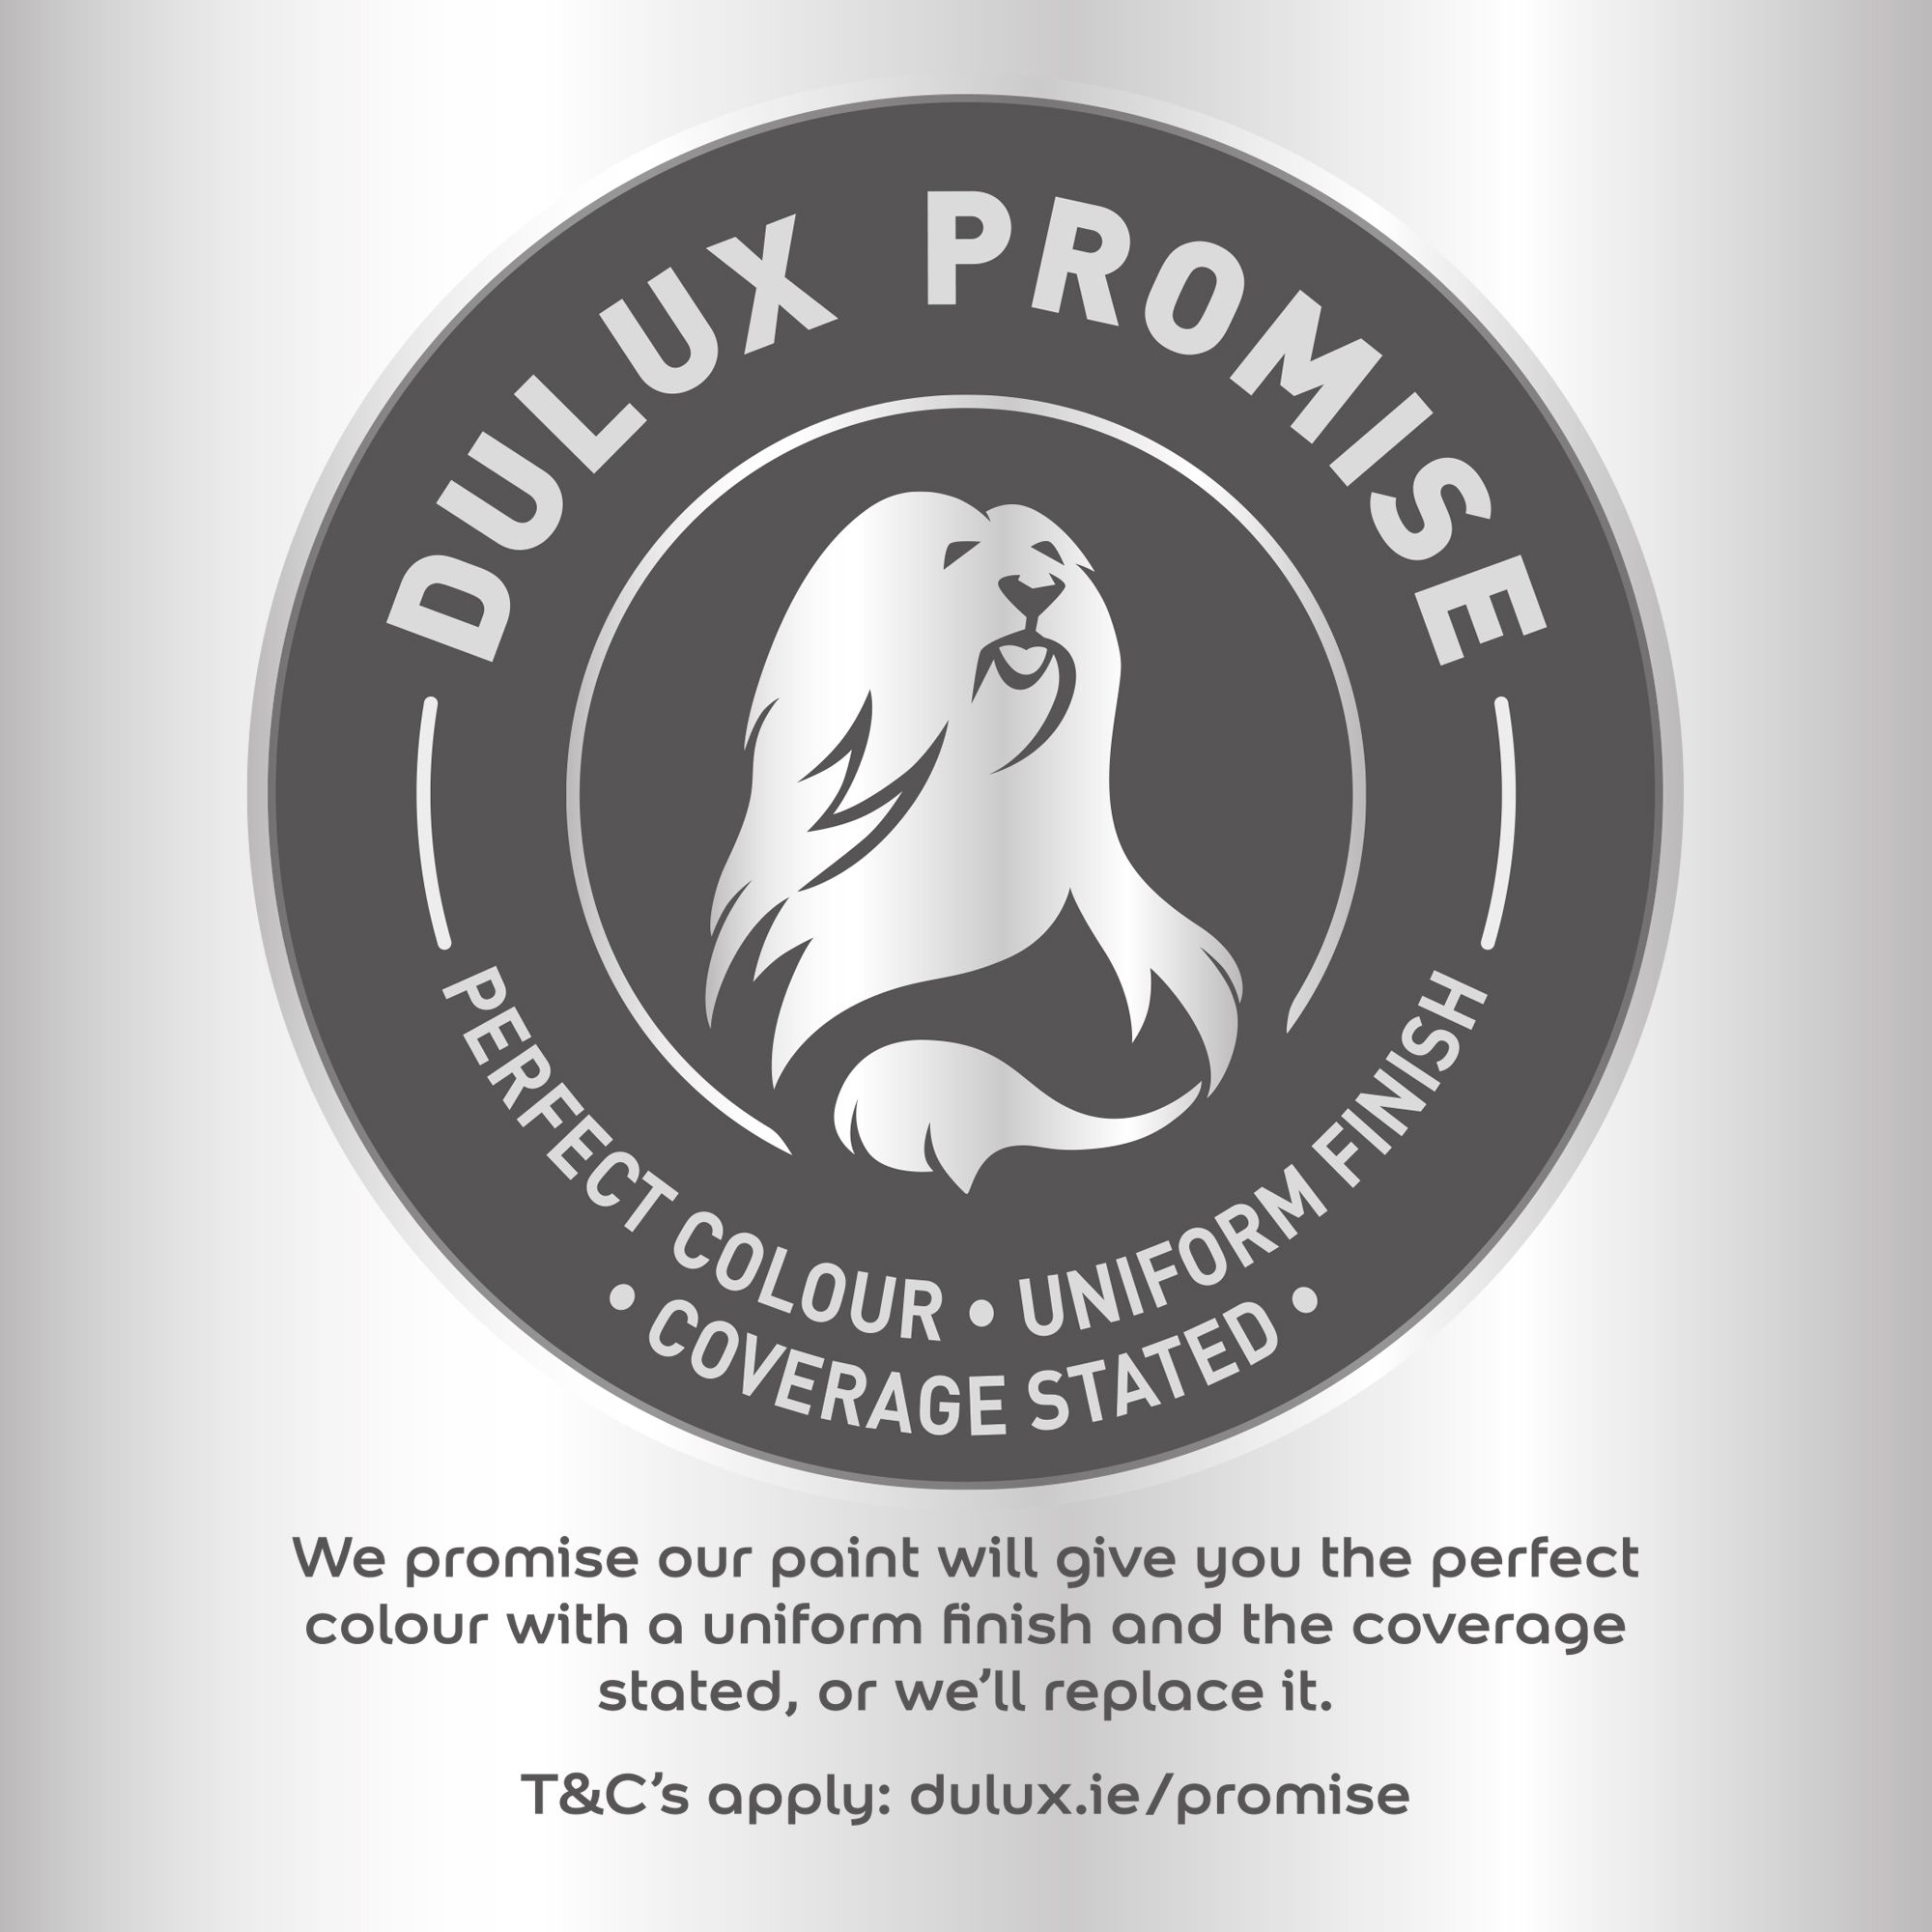 Dulux Easycare Tir na nog Vinyl matt Emulsion paint, 5L